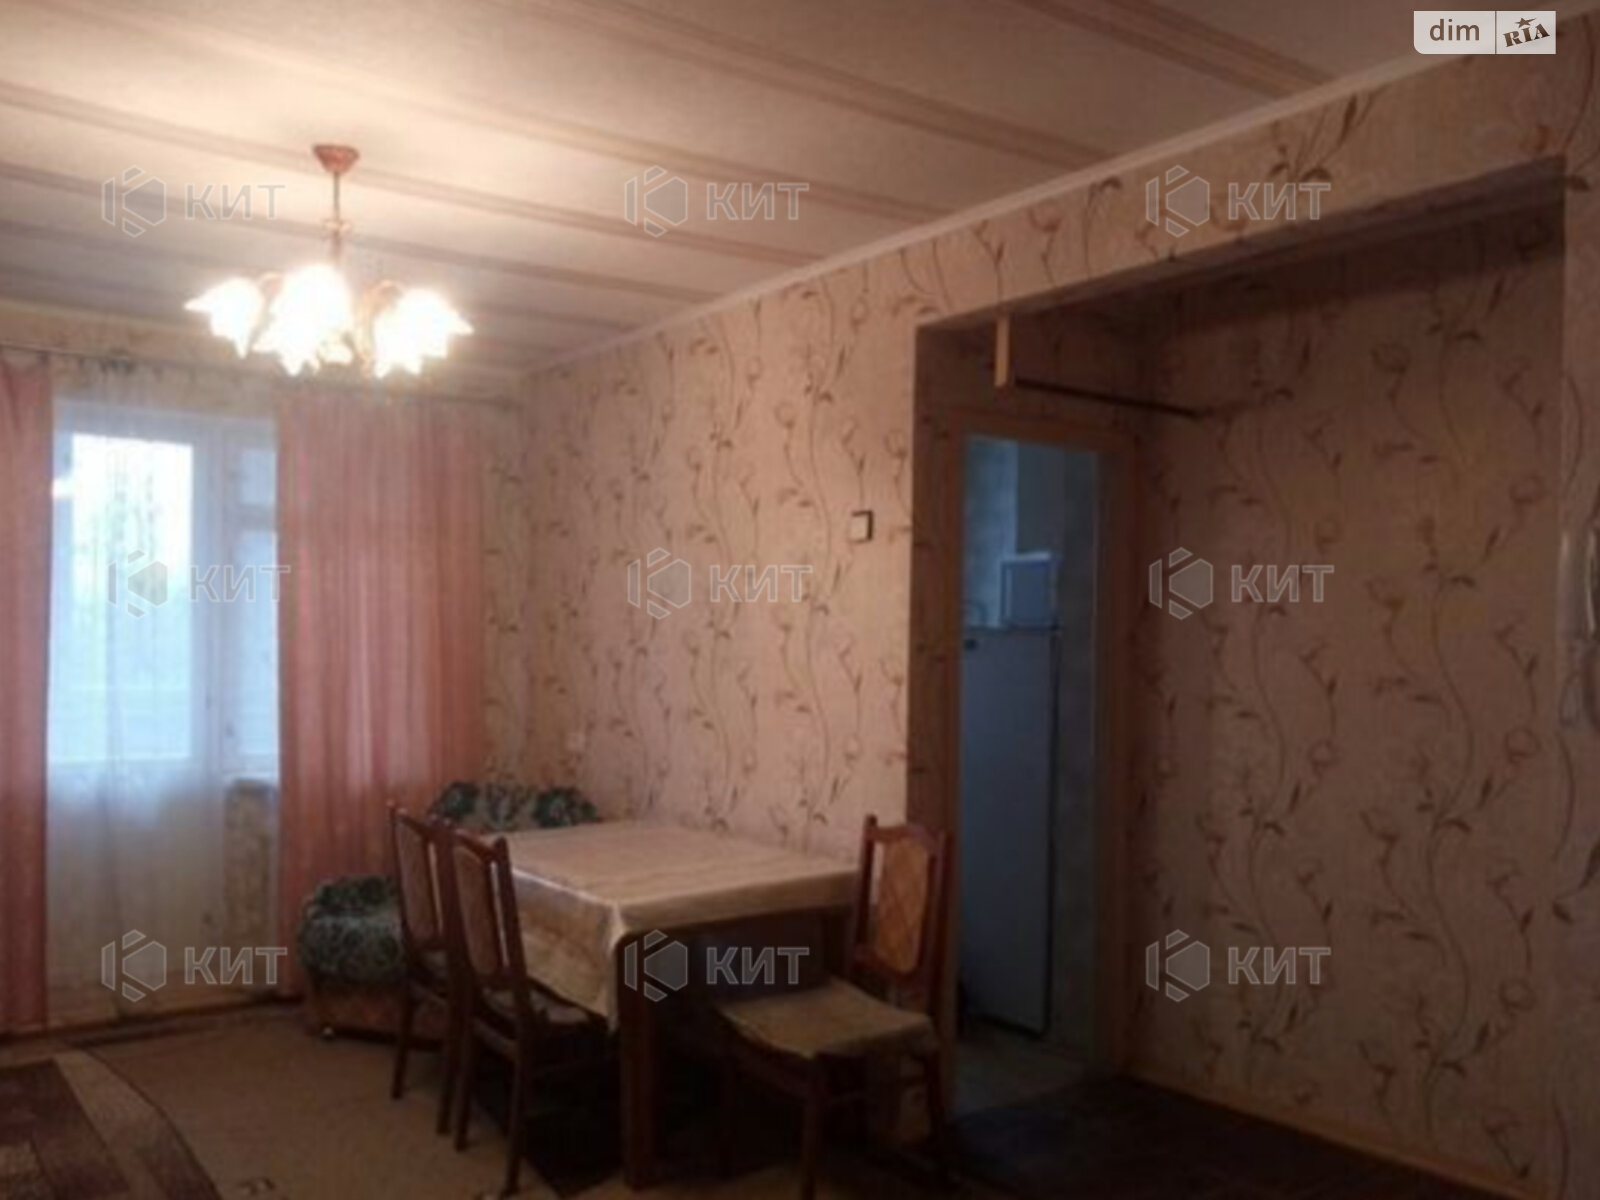 Продаж двокімнатної квартири в Харкові, на вул. Отакара Яроша 5, район Павлове Поле фото 1